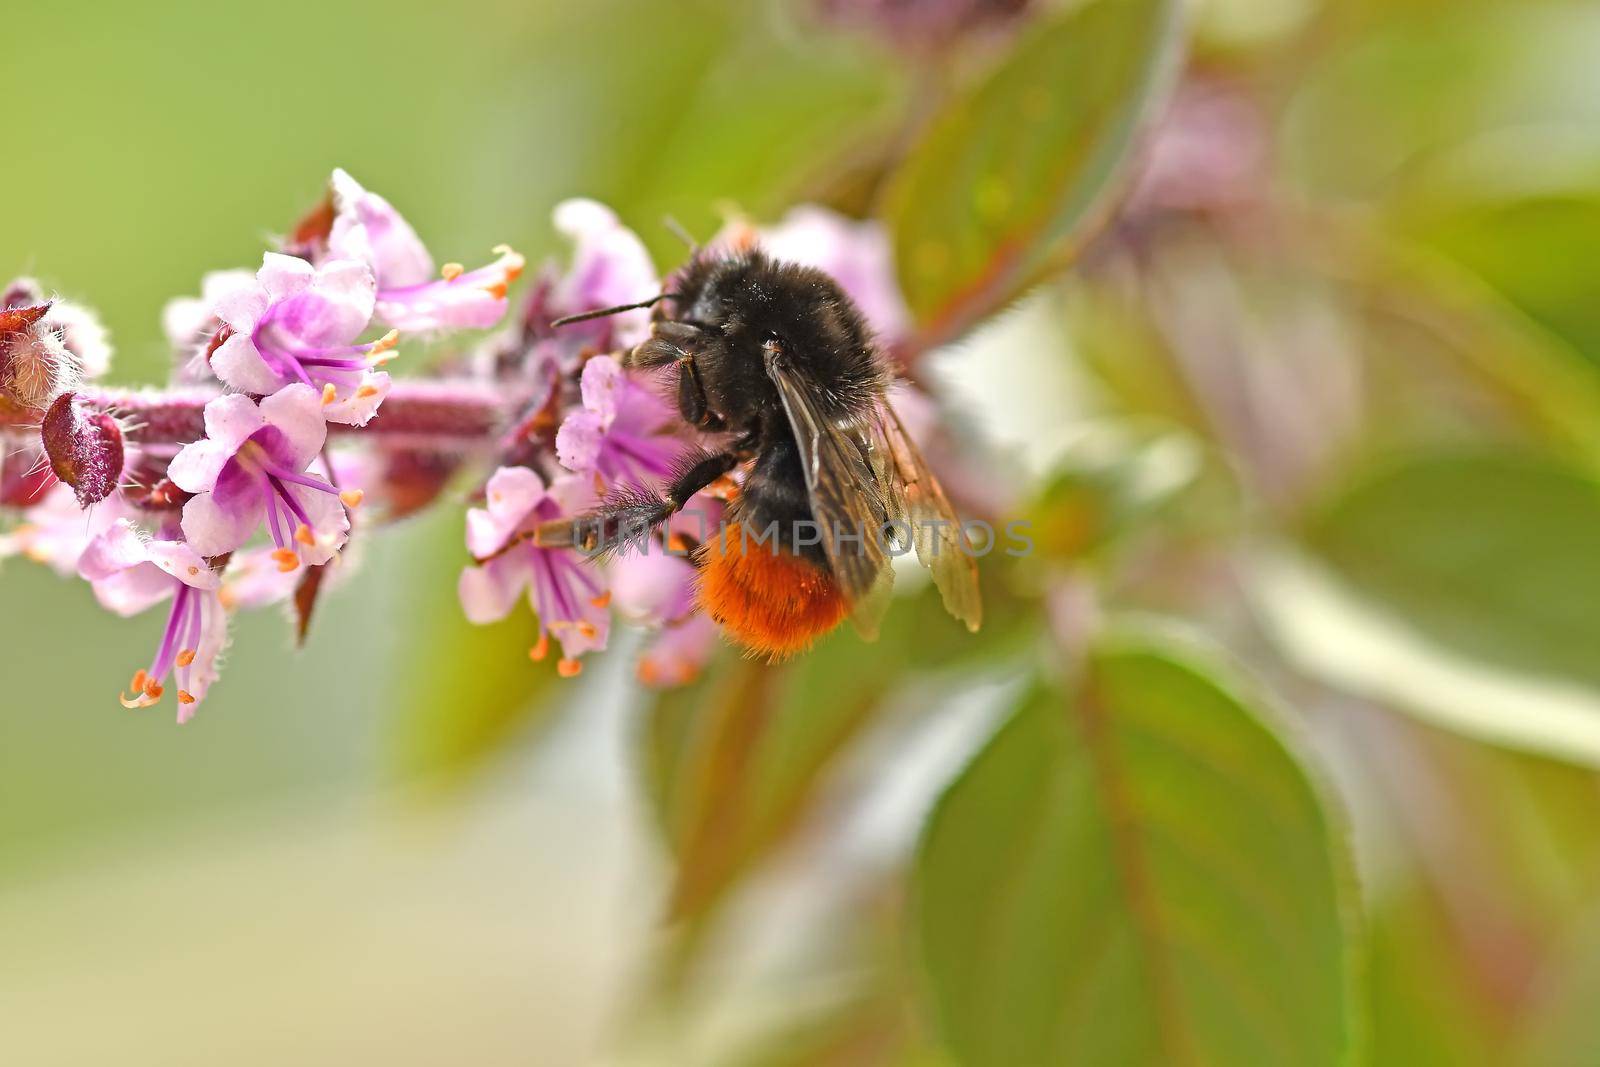 red-tailed bumblebee on oregano flower by Jochen